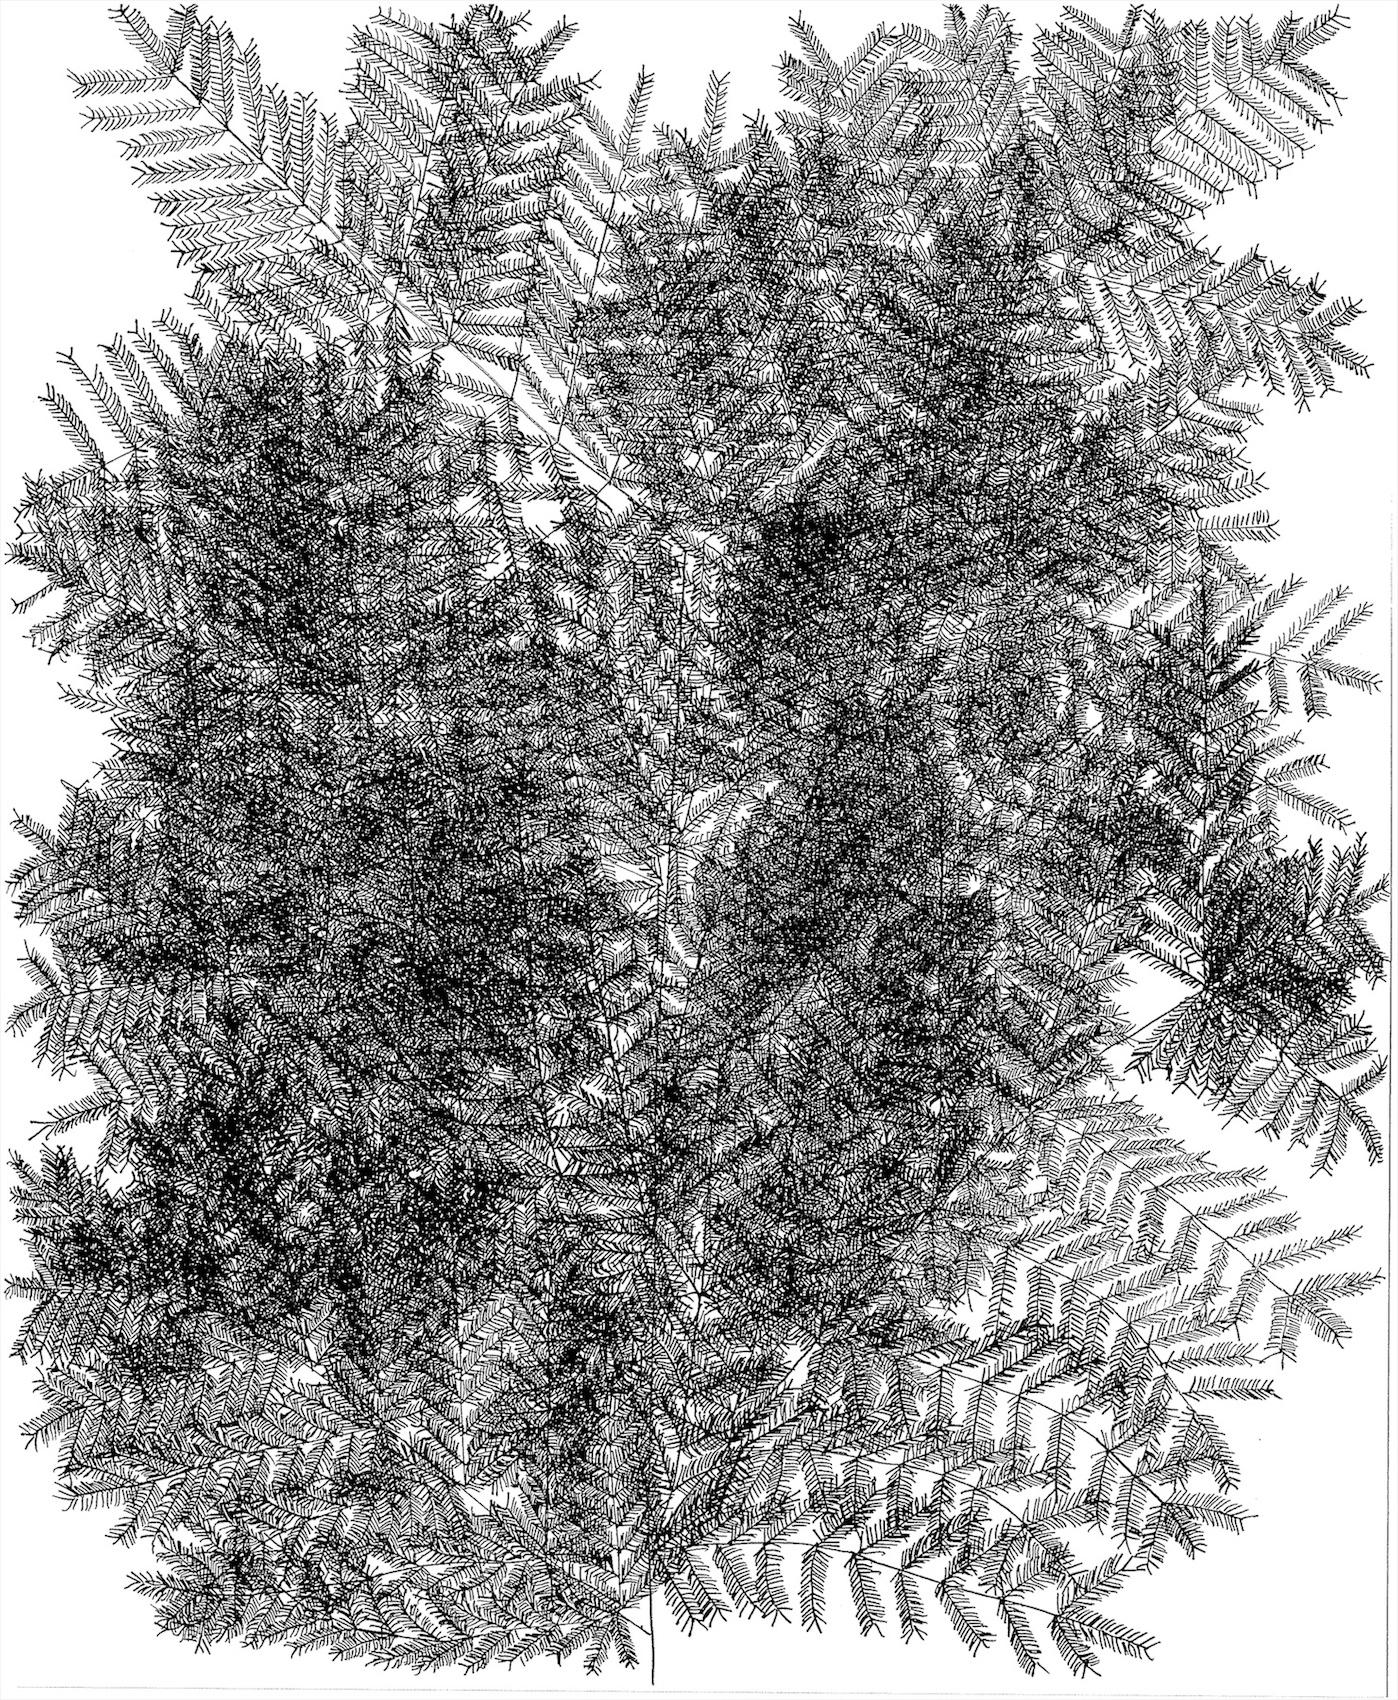 Image for entry 'Fibonacci Tree Vertical 34'